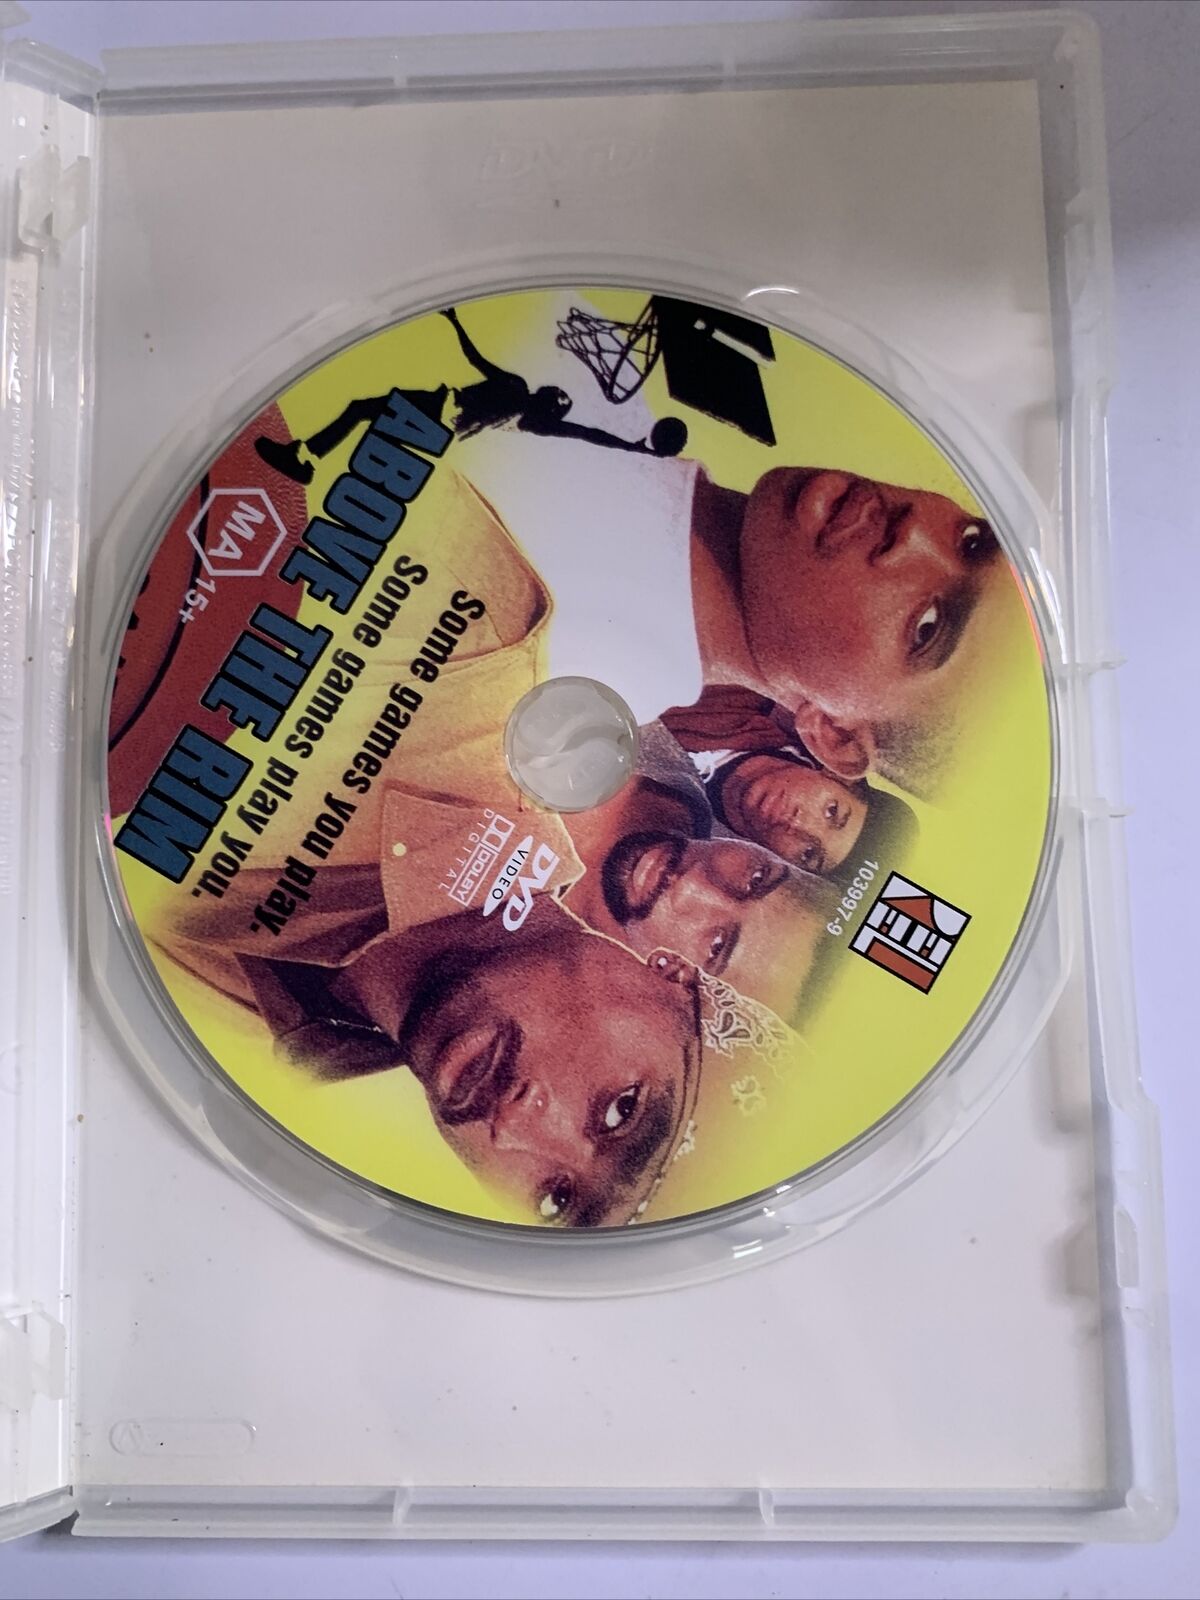 Above The Rim (DVD, 1994) Duane Martin, Tupac Shakur  Region 4